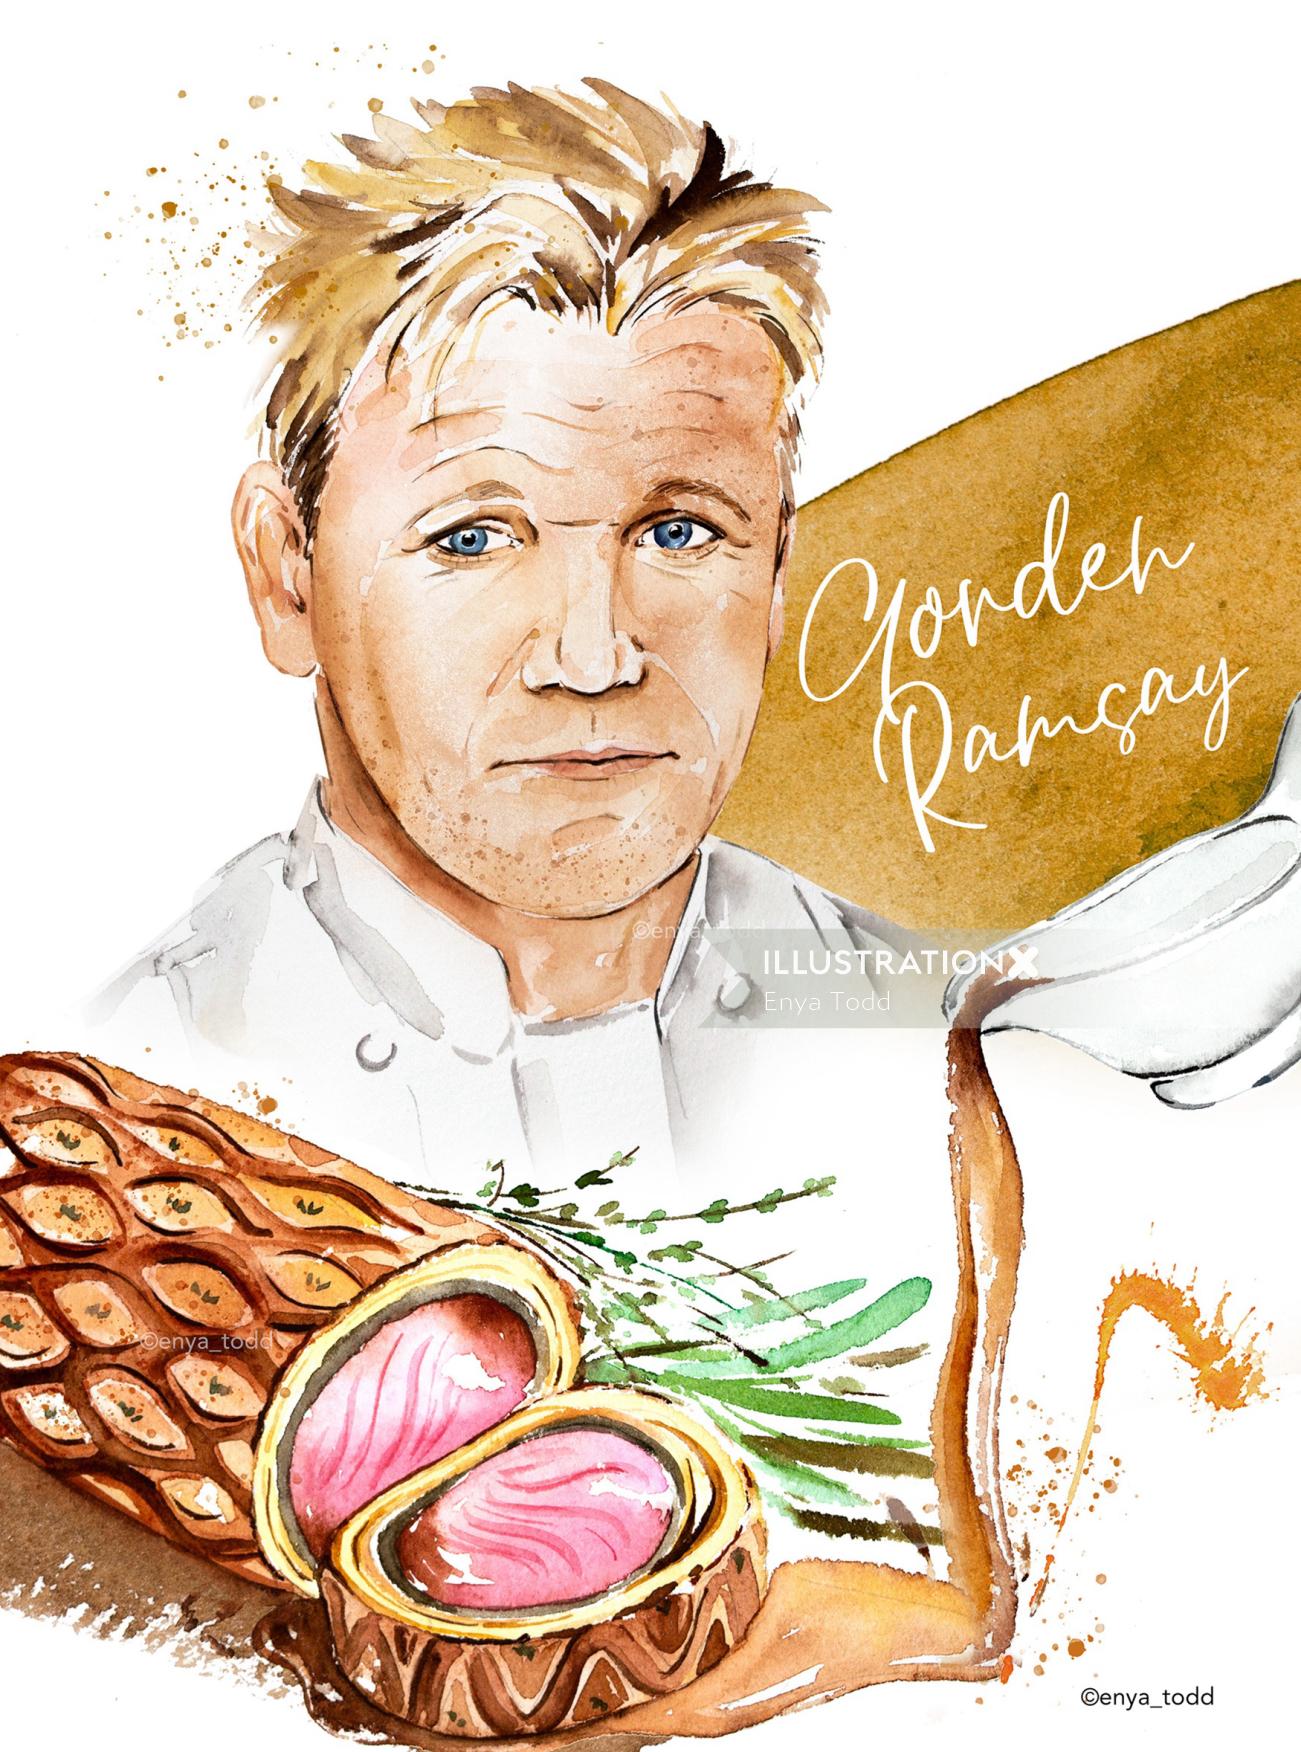 Portraiture of Gorden Ramsay is a British chef